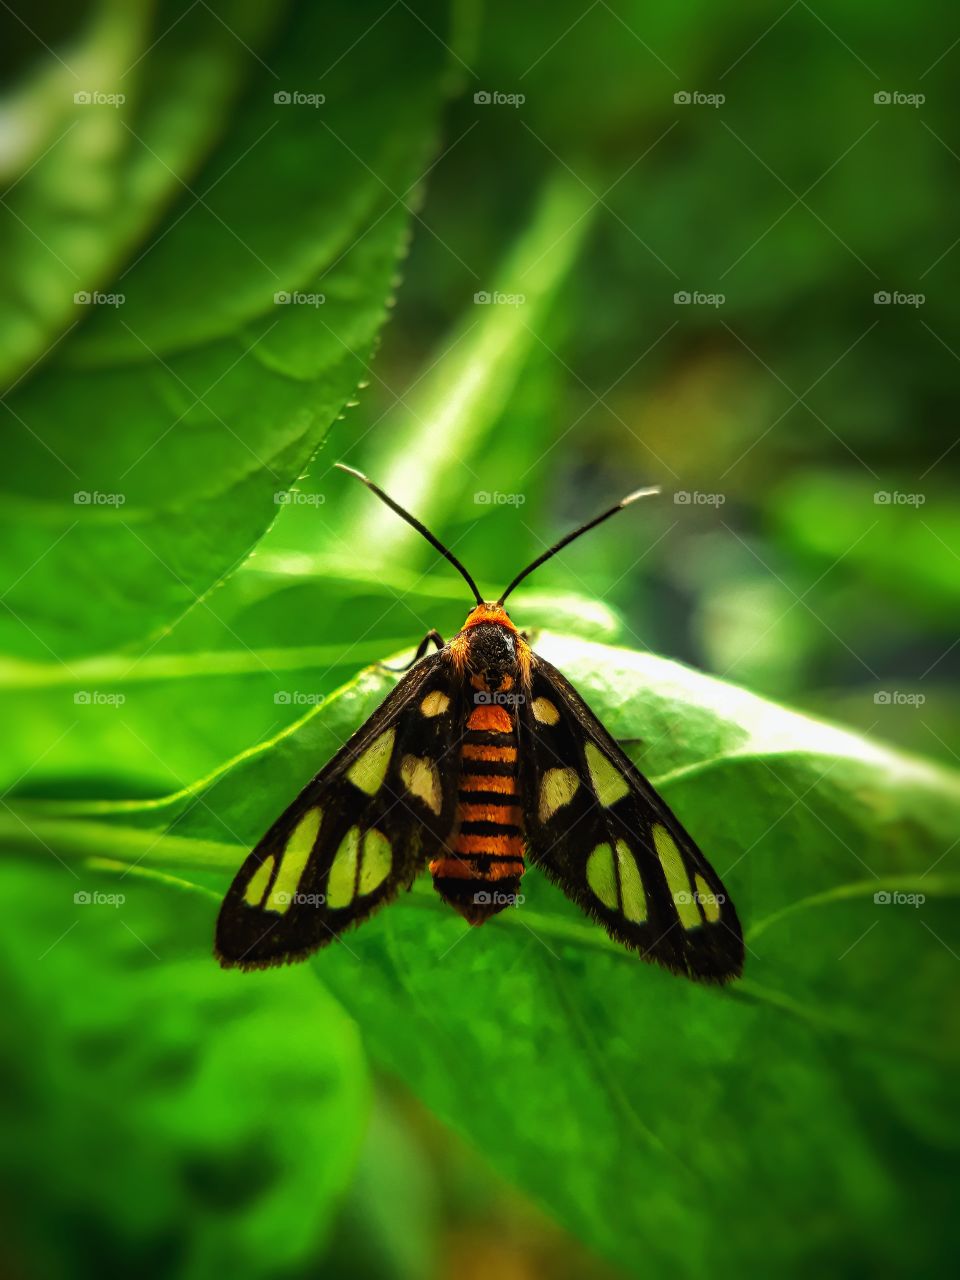 Amata huebneri (Tiger Moth) on the leaf